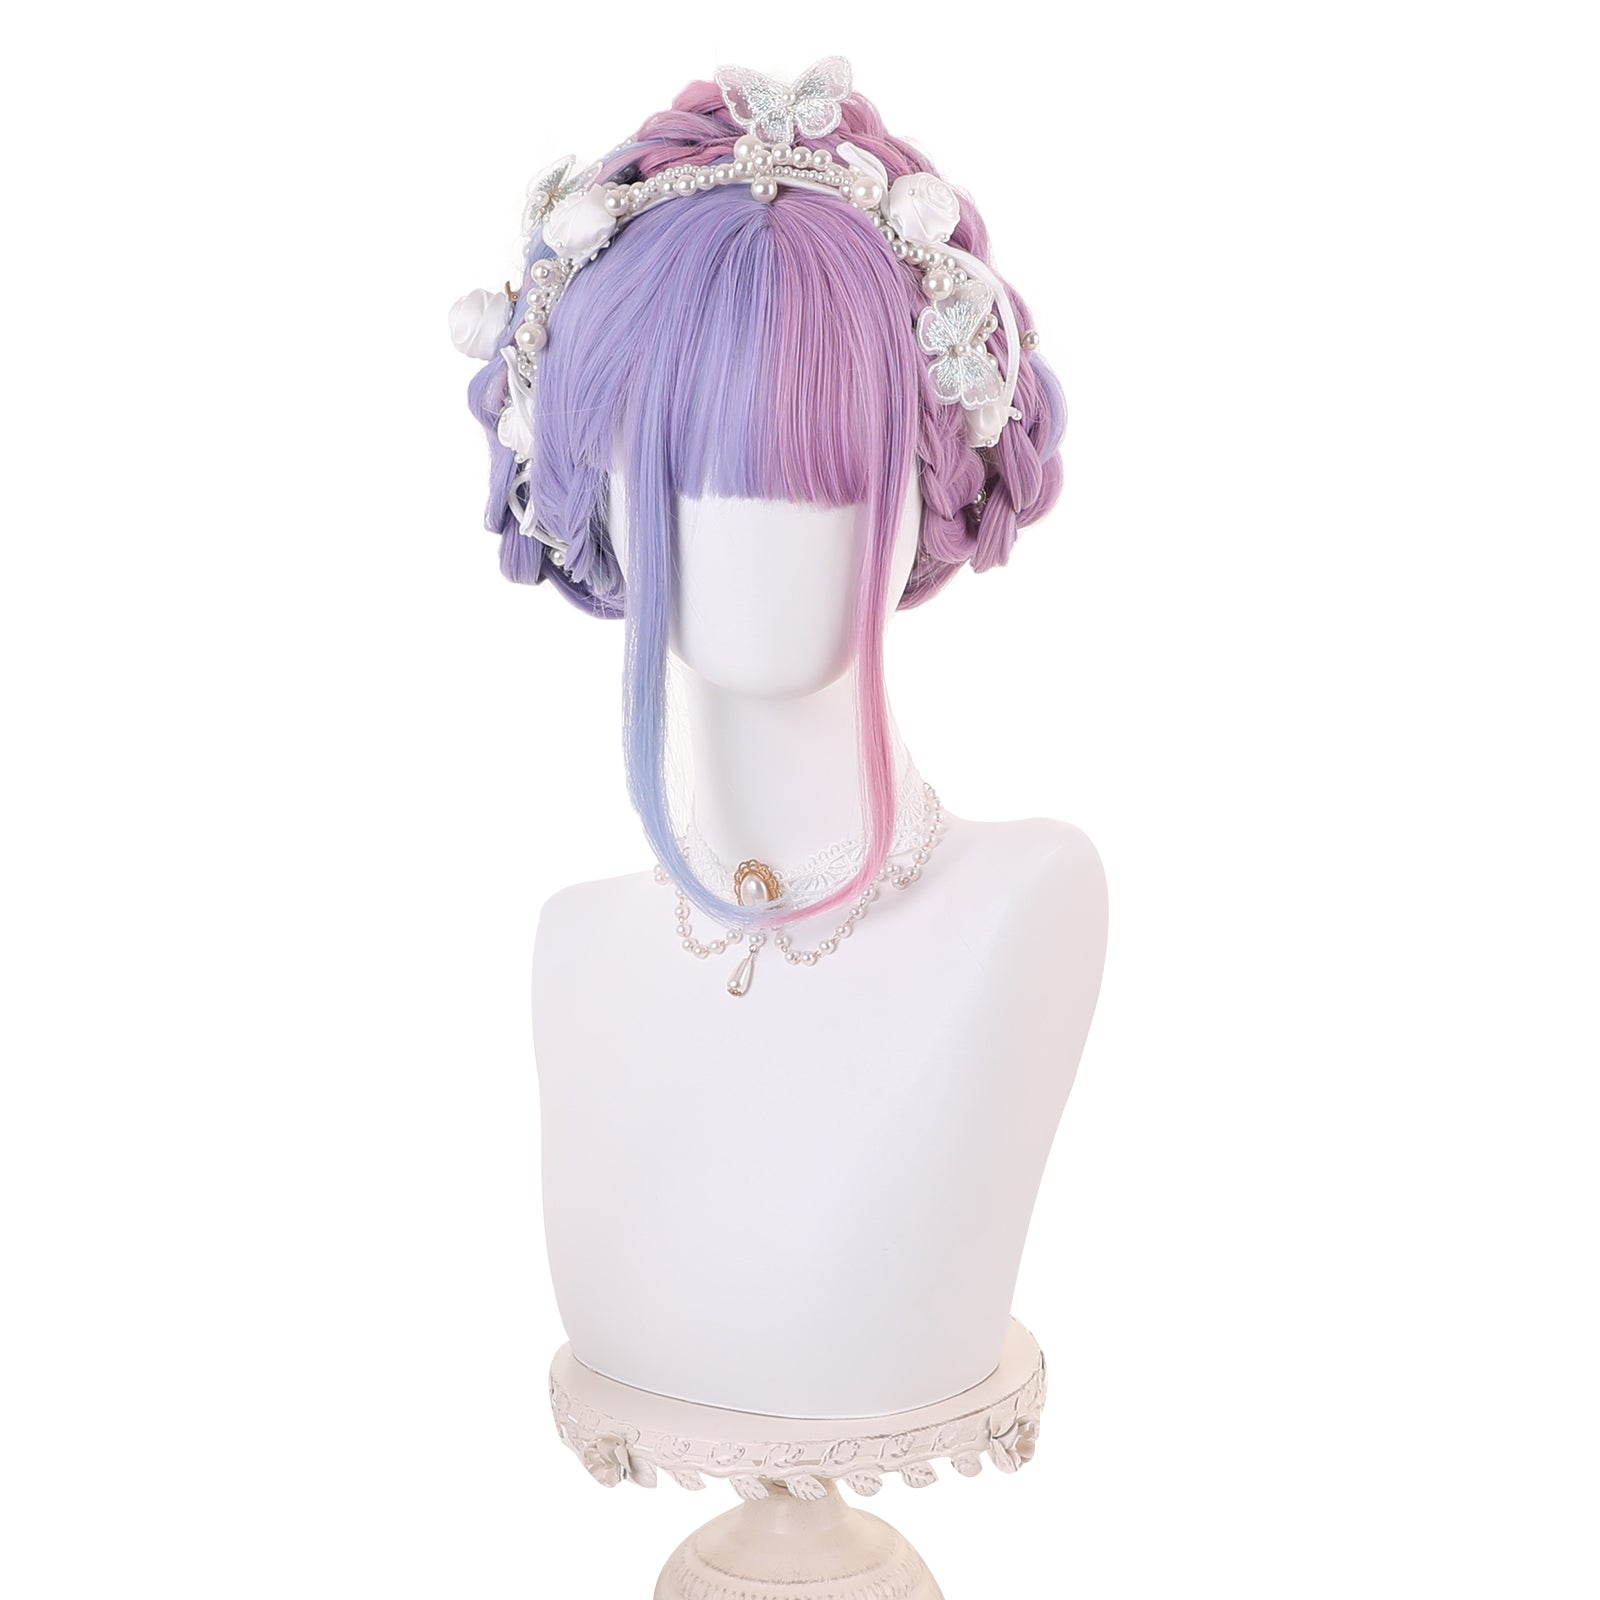 Rulercosplay Rainbow Candy Wigs Half blue and half purple Long Lolita Wig